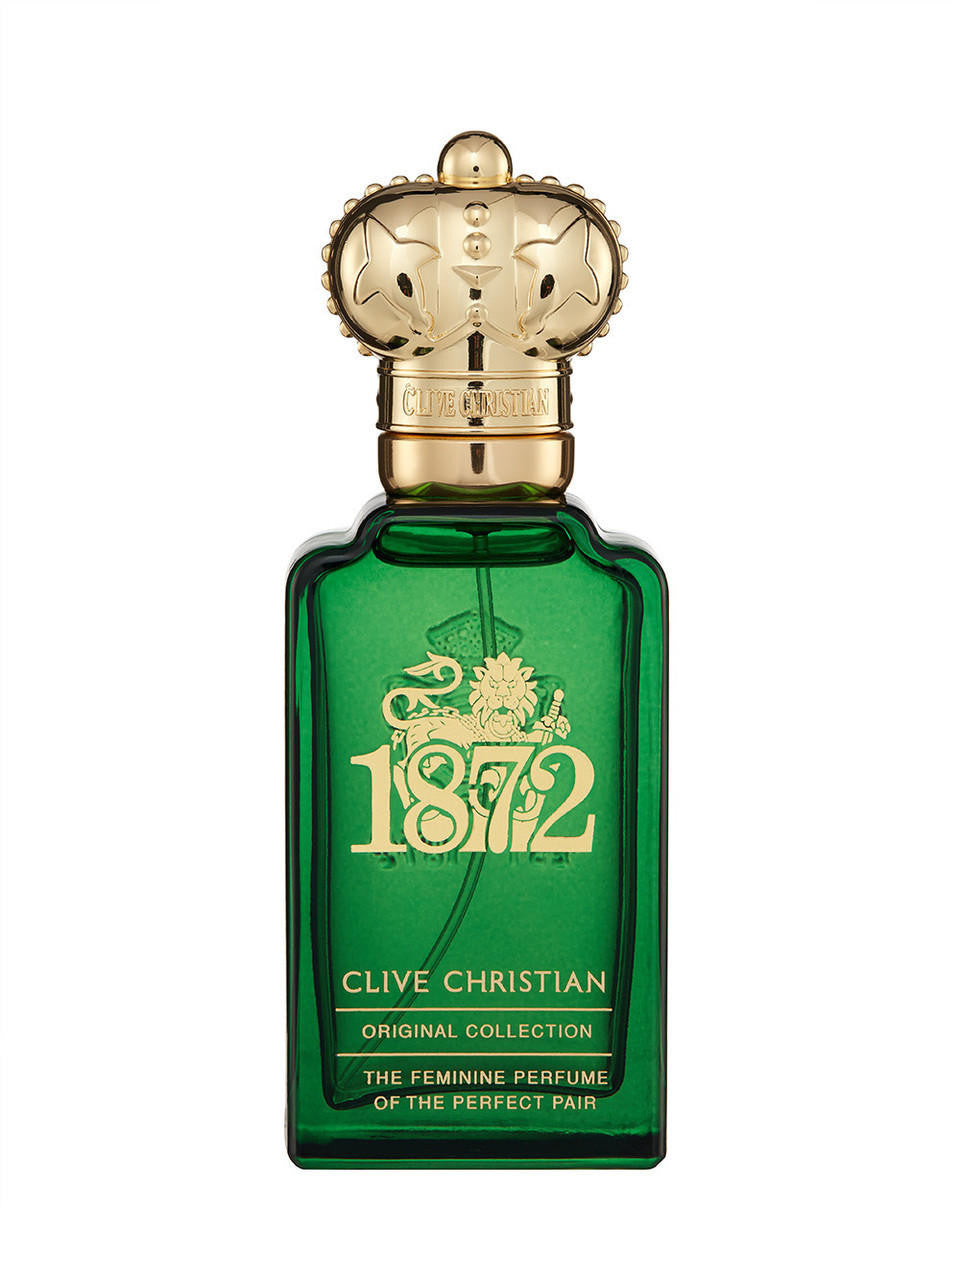  Clive Christian Original Collection 1872 Feminine Parfum 